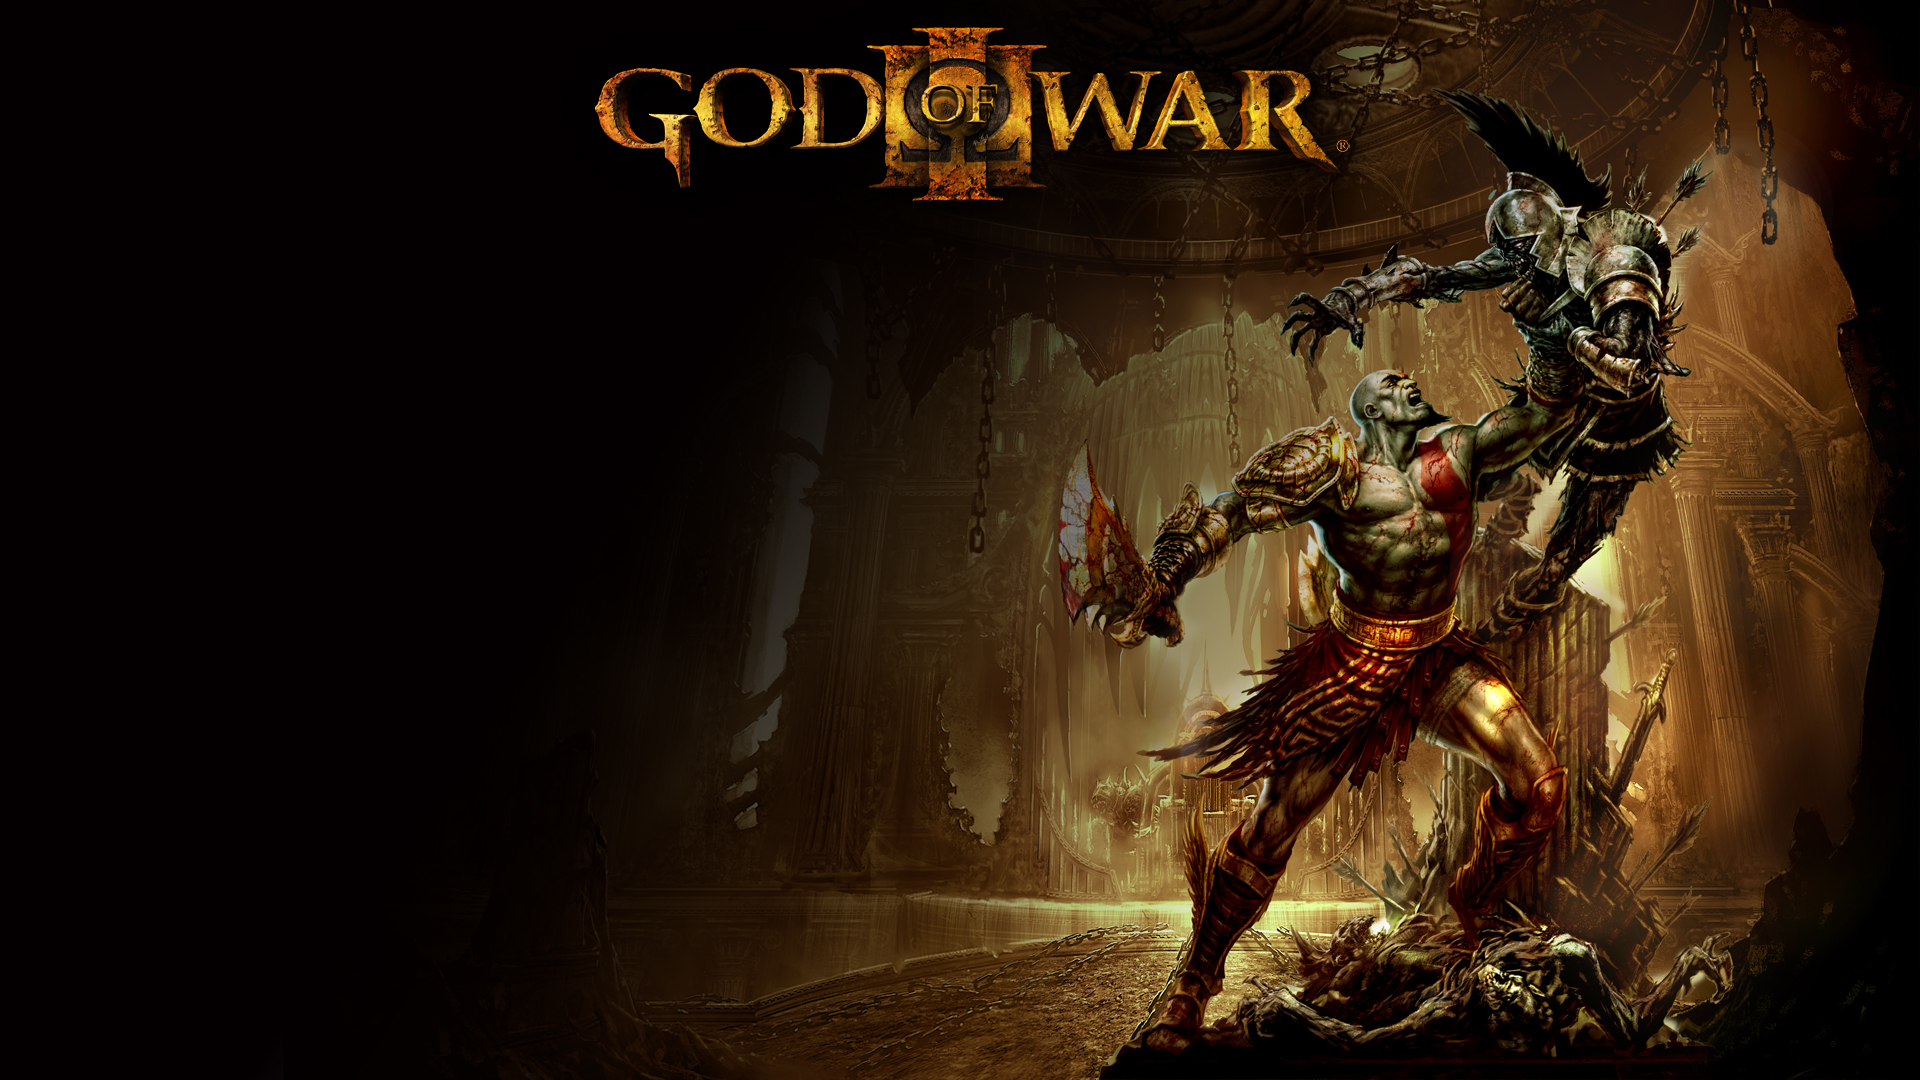 god of war wallpaper hd,action adventure game,pc game,darkness,adventure game,cg artwork